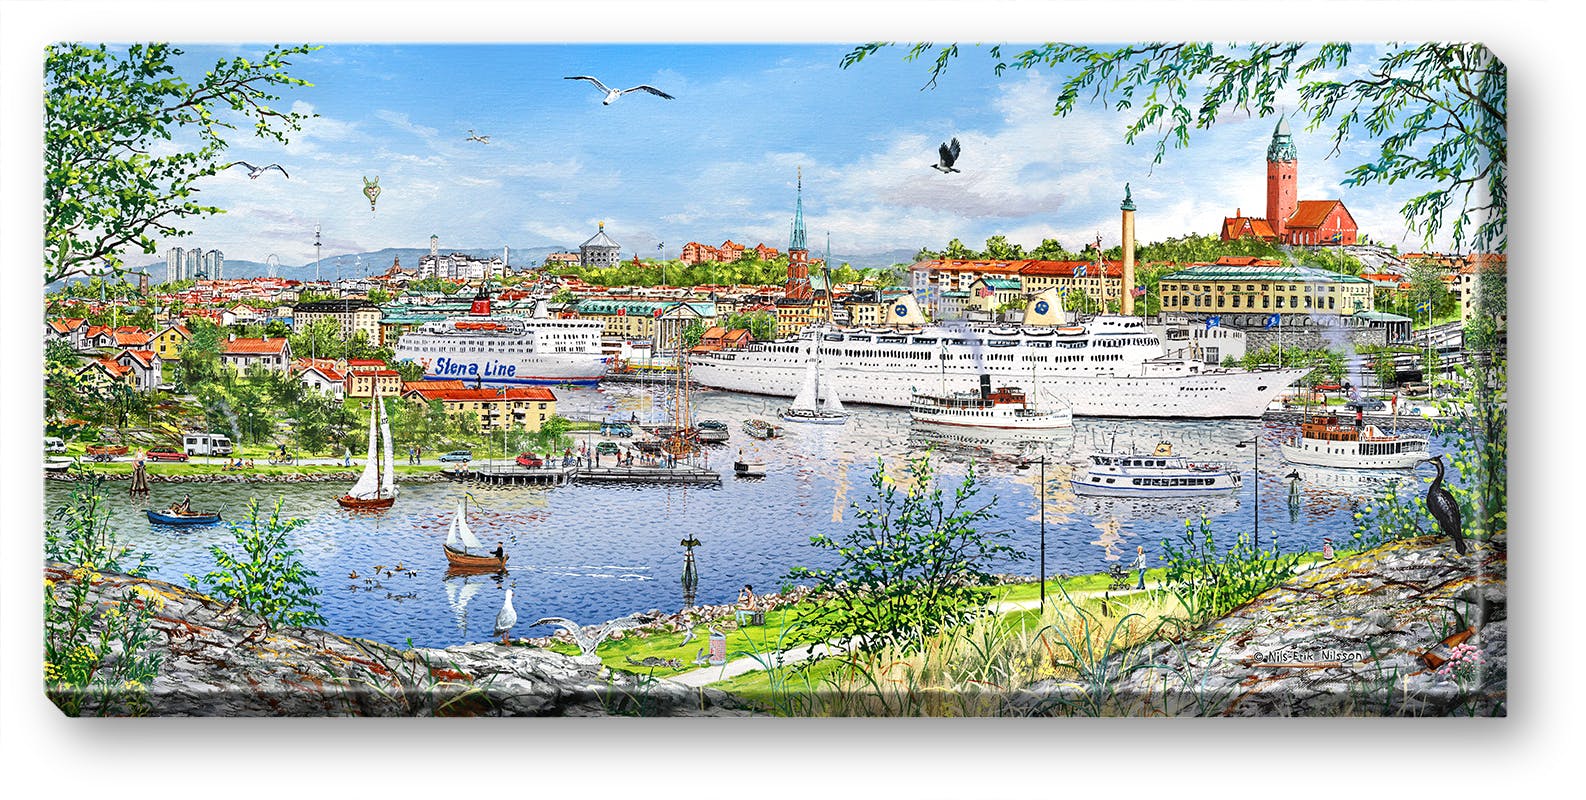 Canvas Göteborg Masthuggsvy  med Kungsholm 64 x 29 x 2 cm.